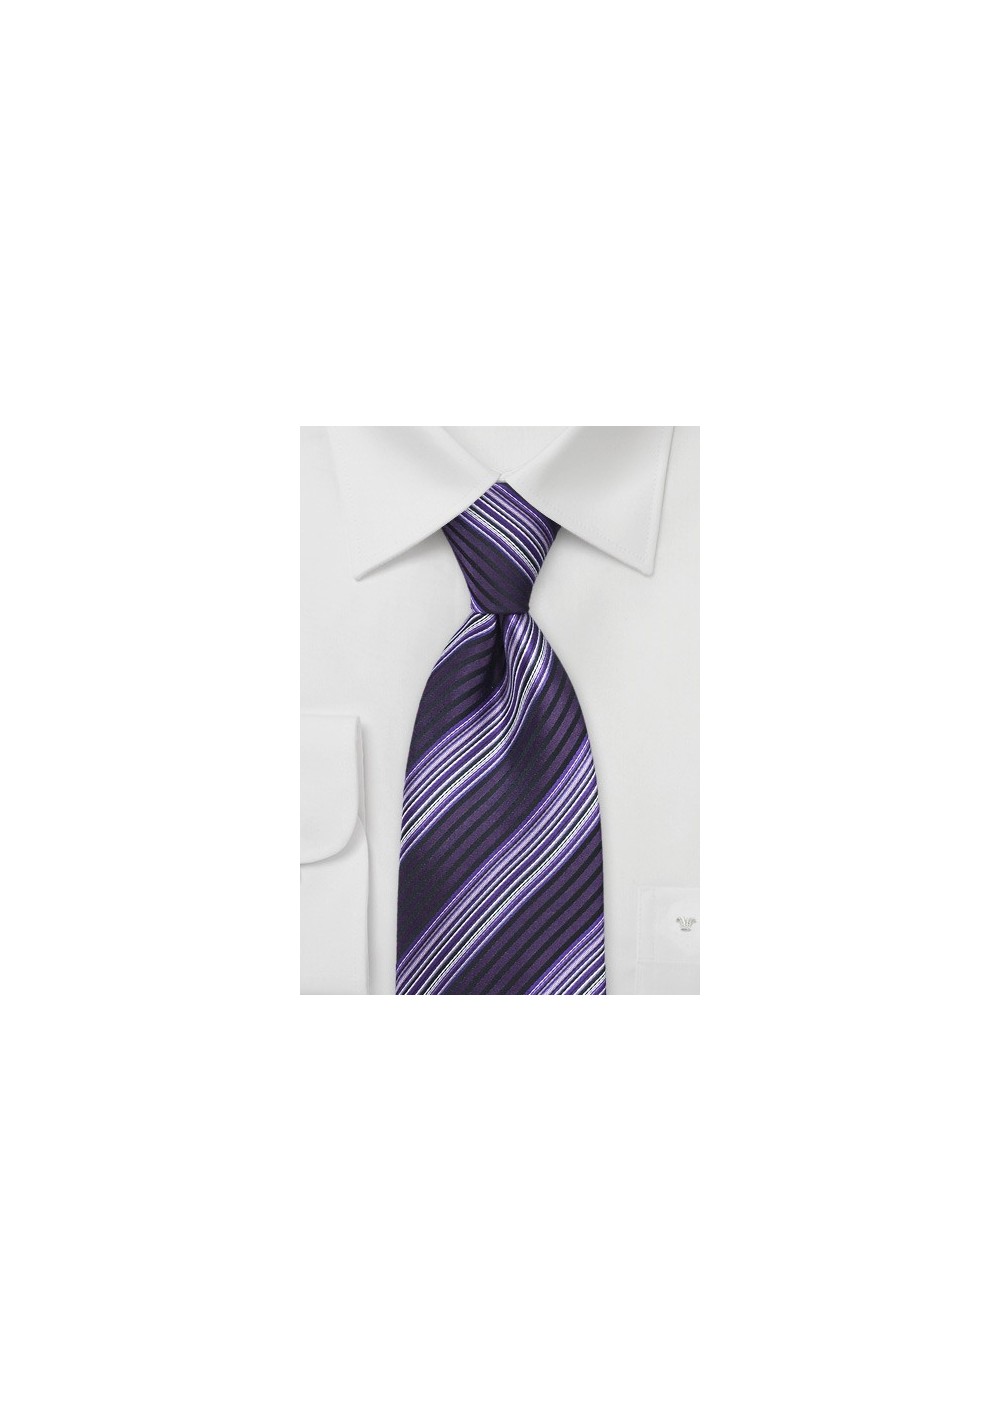 Trendy Purple Designer Tie